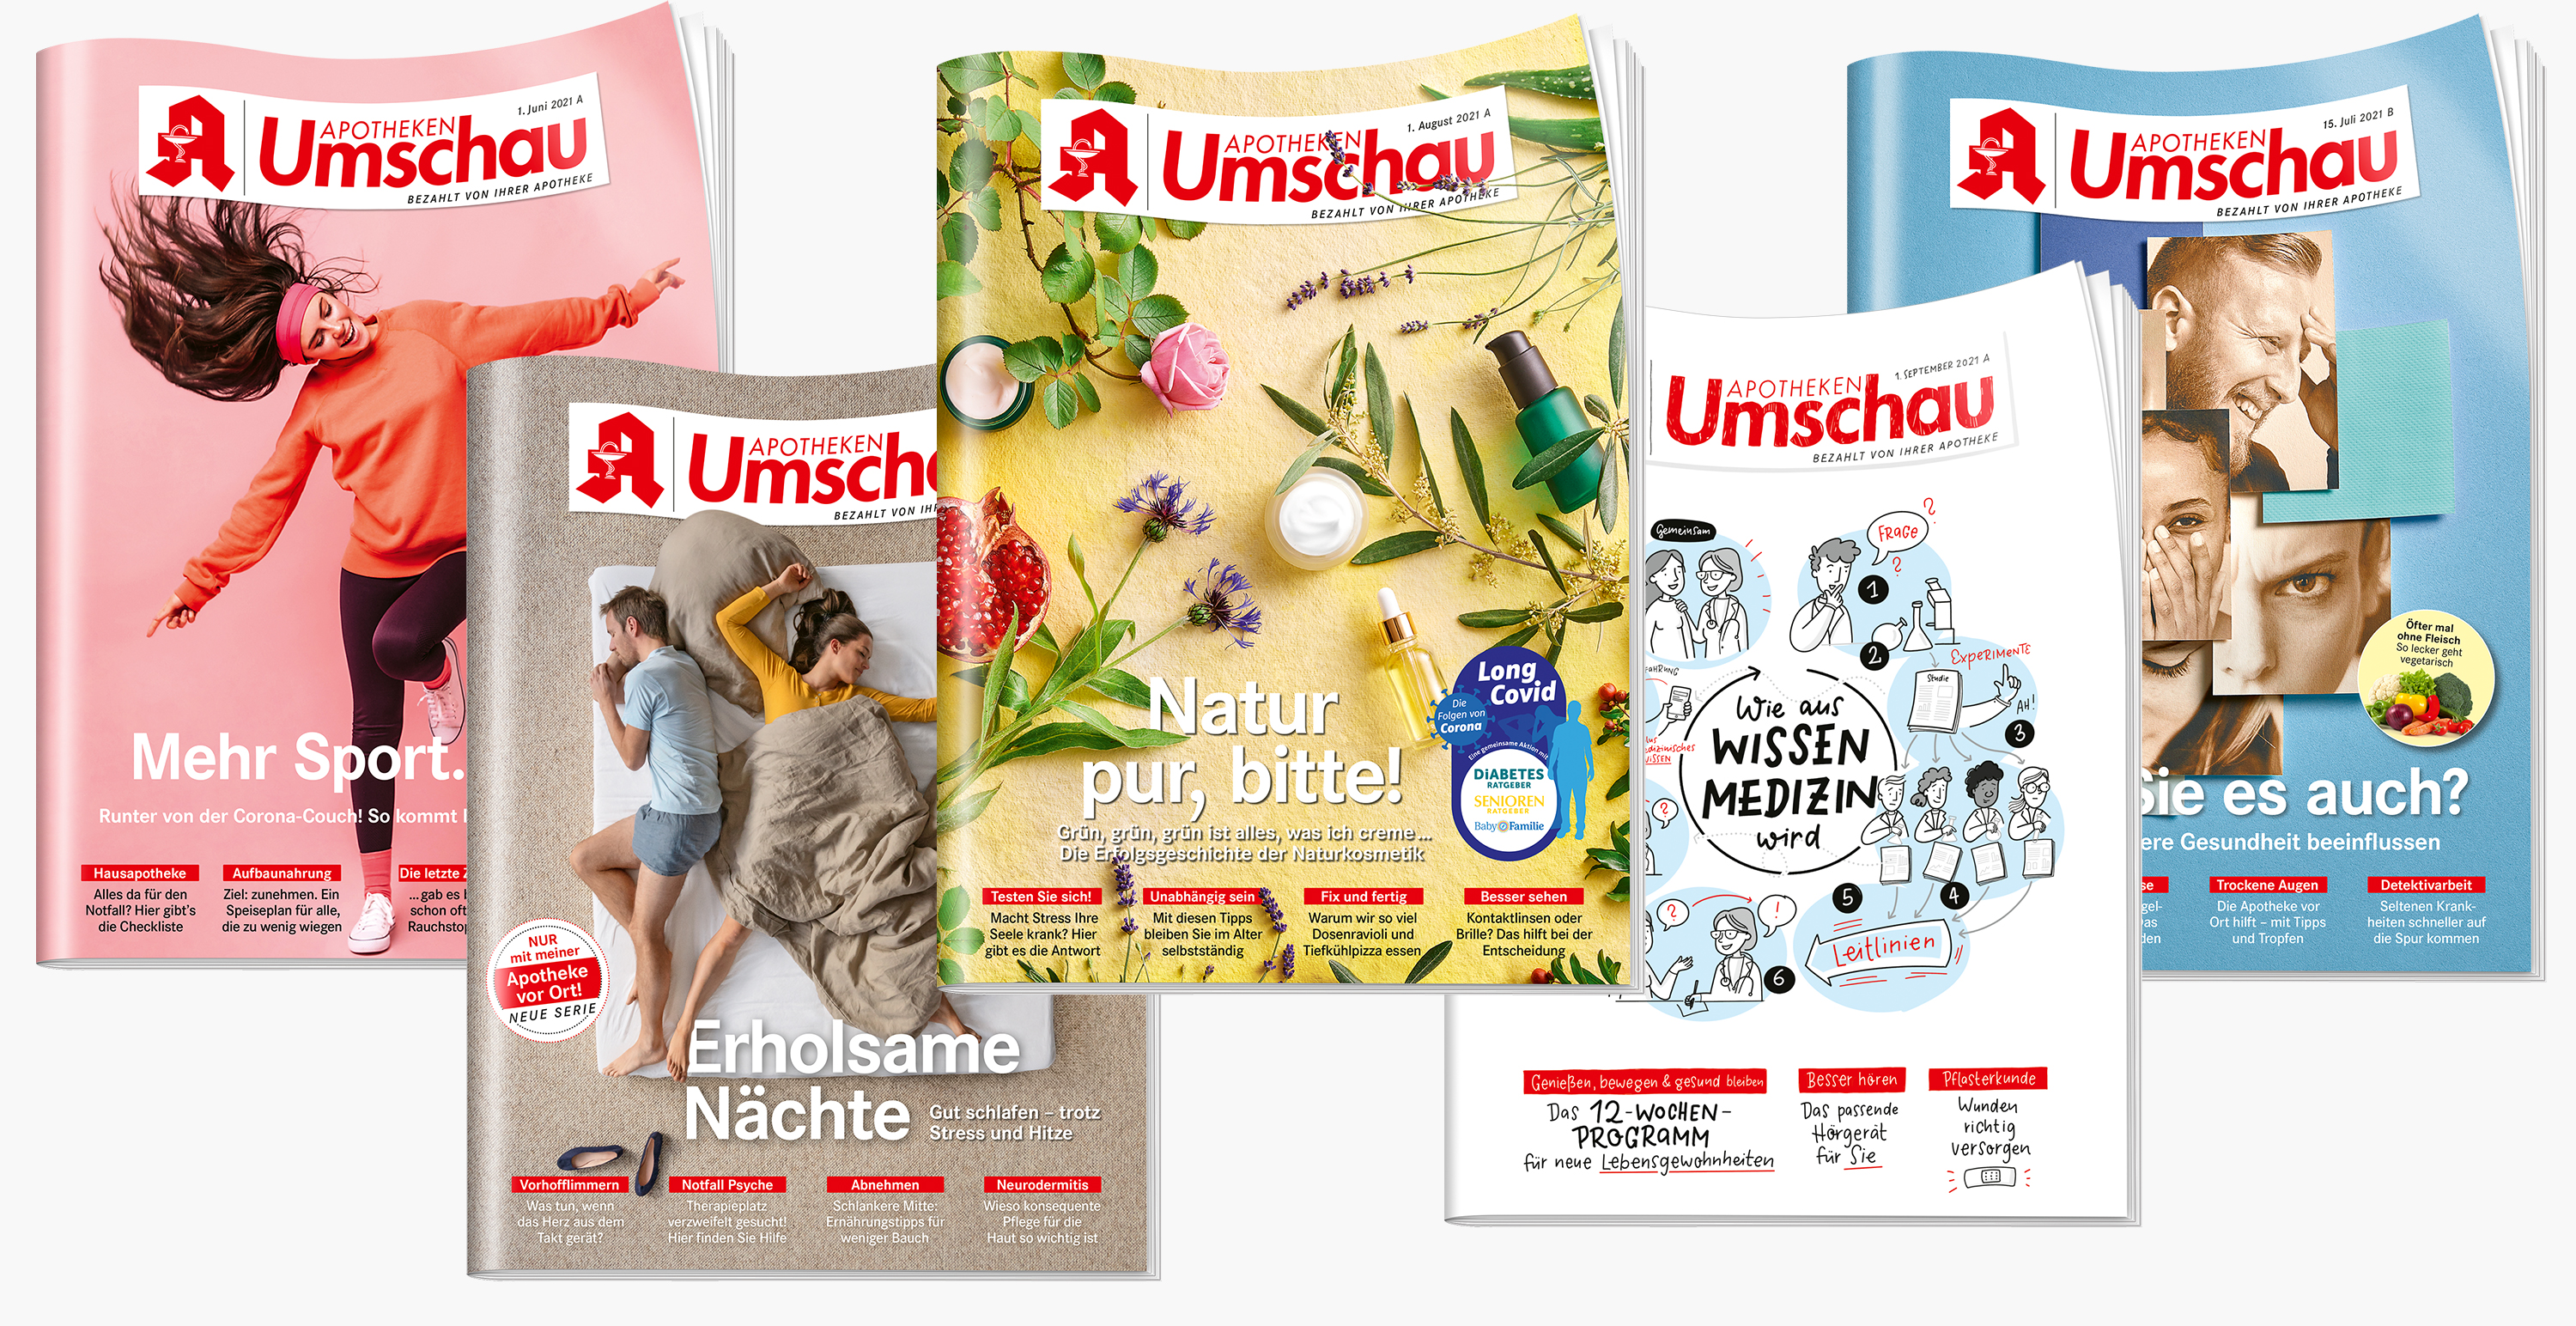 Apotheken-Umschau-(Pharmacy-Review).jpg